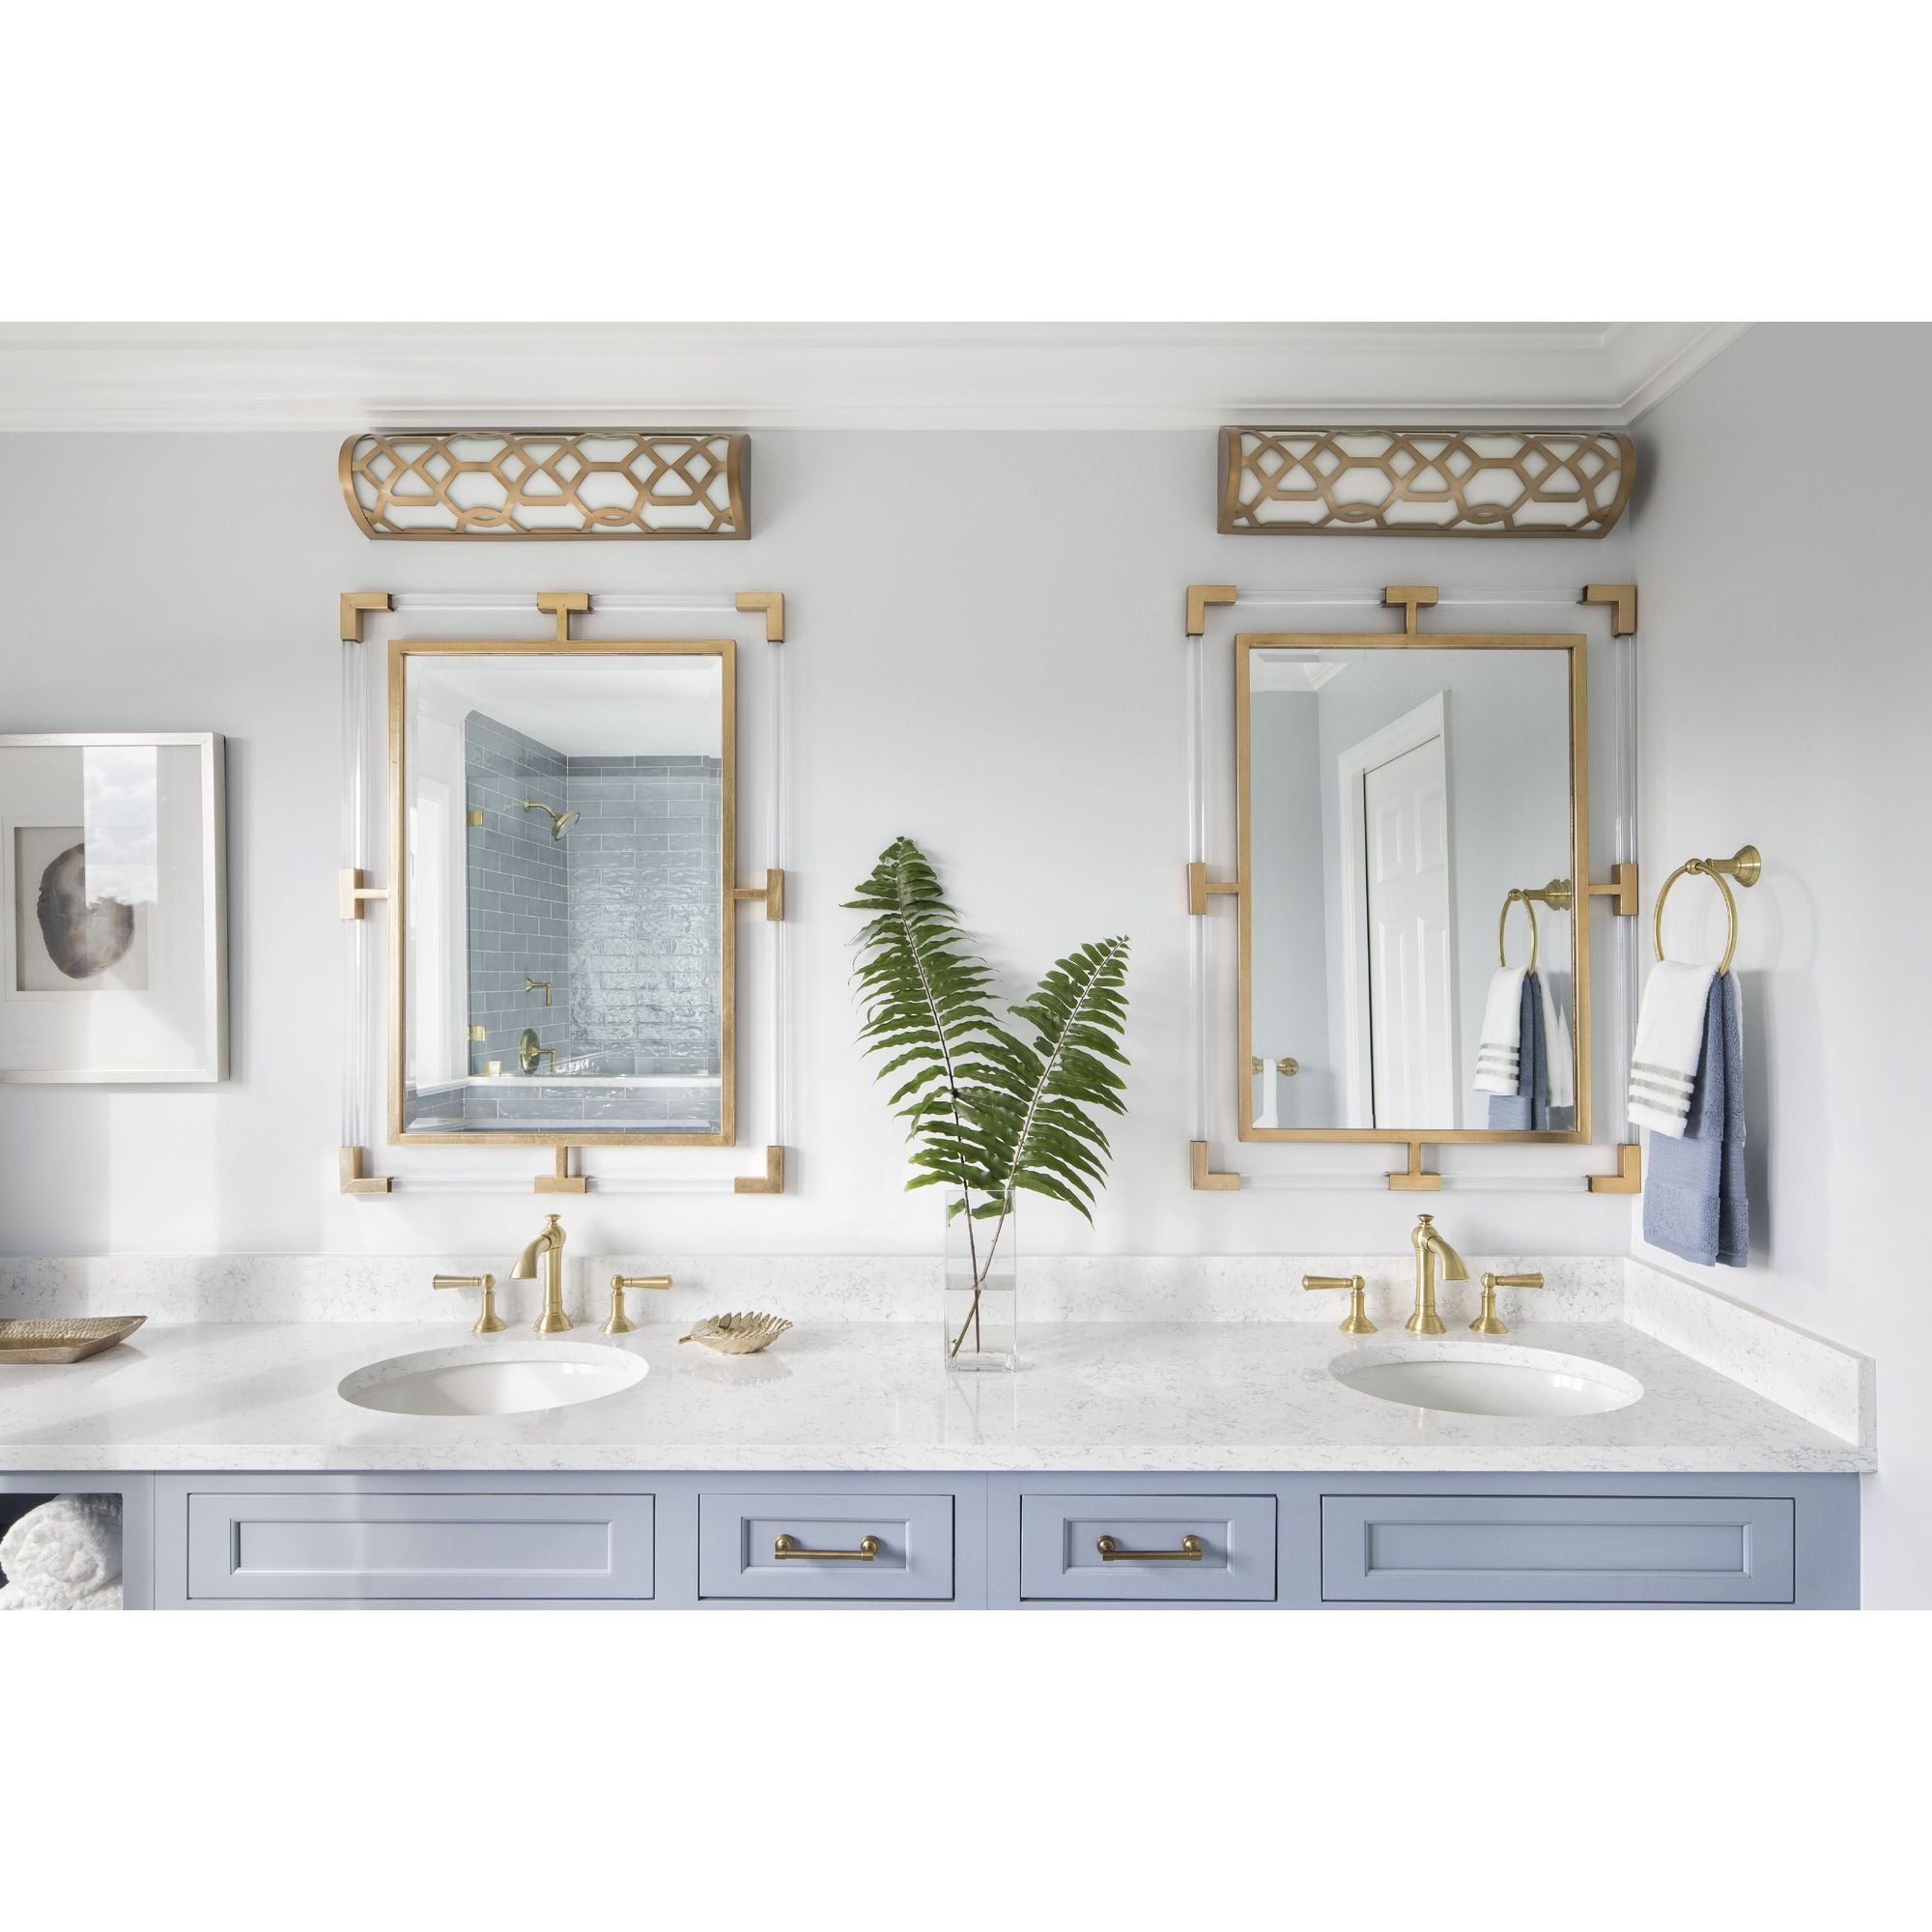 Libby Langdon for Crystorama Jennings 1 Light Aged Brass Bathroom Vanity